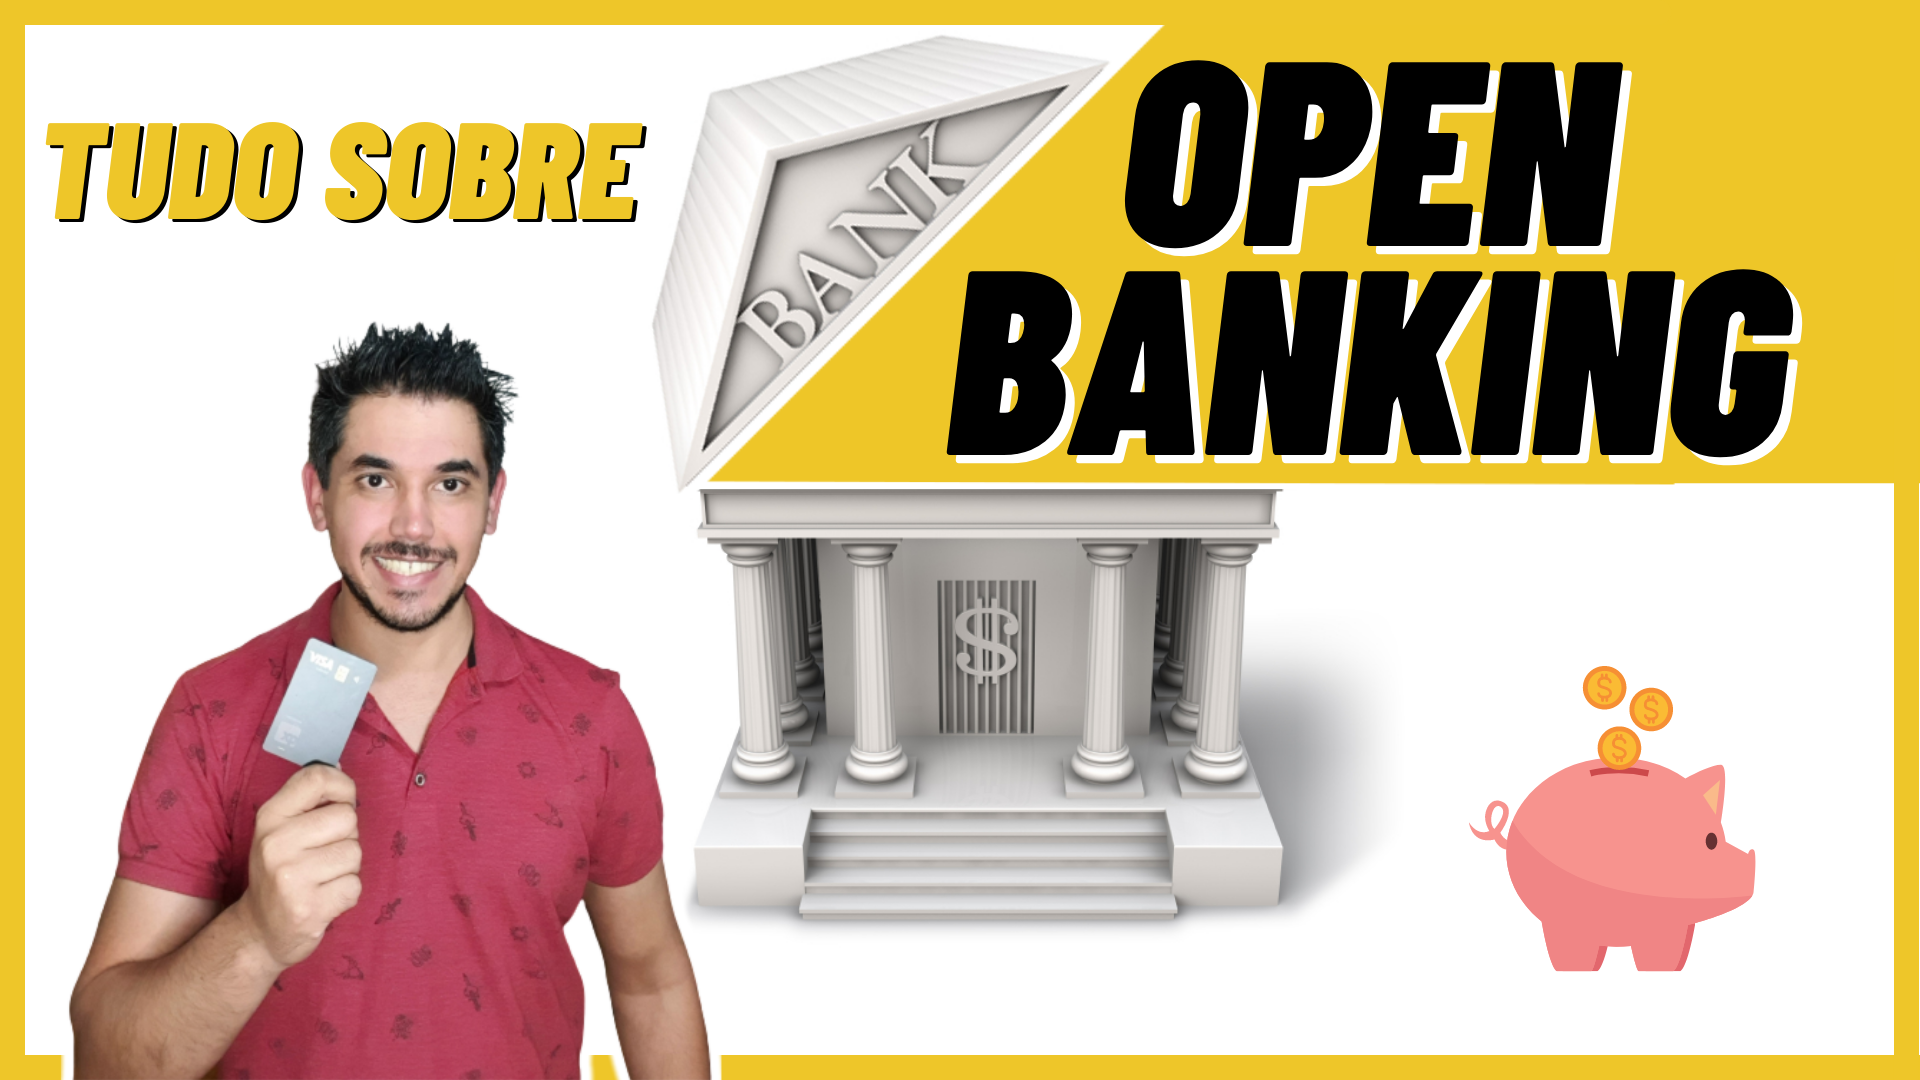 OPEN BANKING Tudo sobre o Open Banking, a revolução do sistema bancário e financeiro